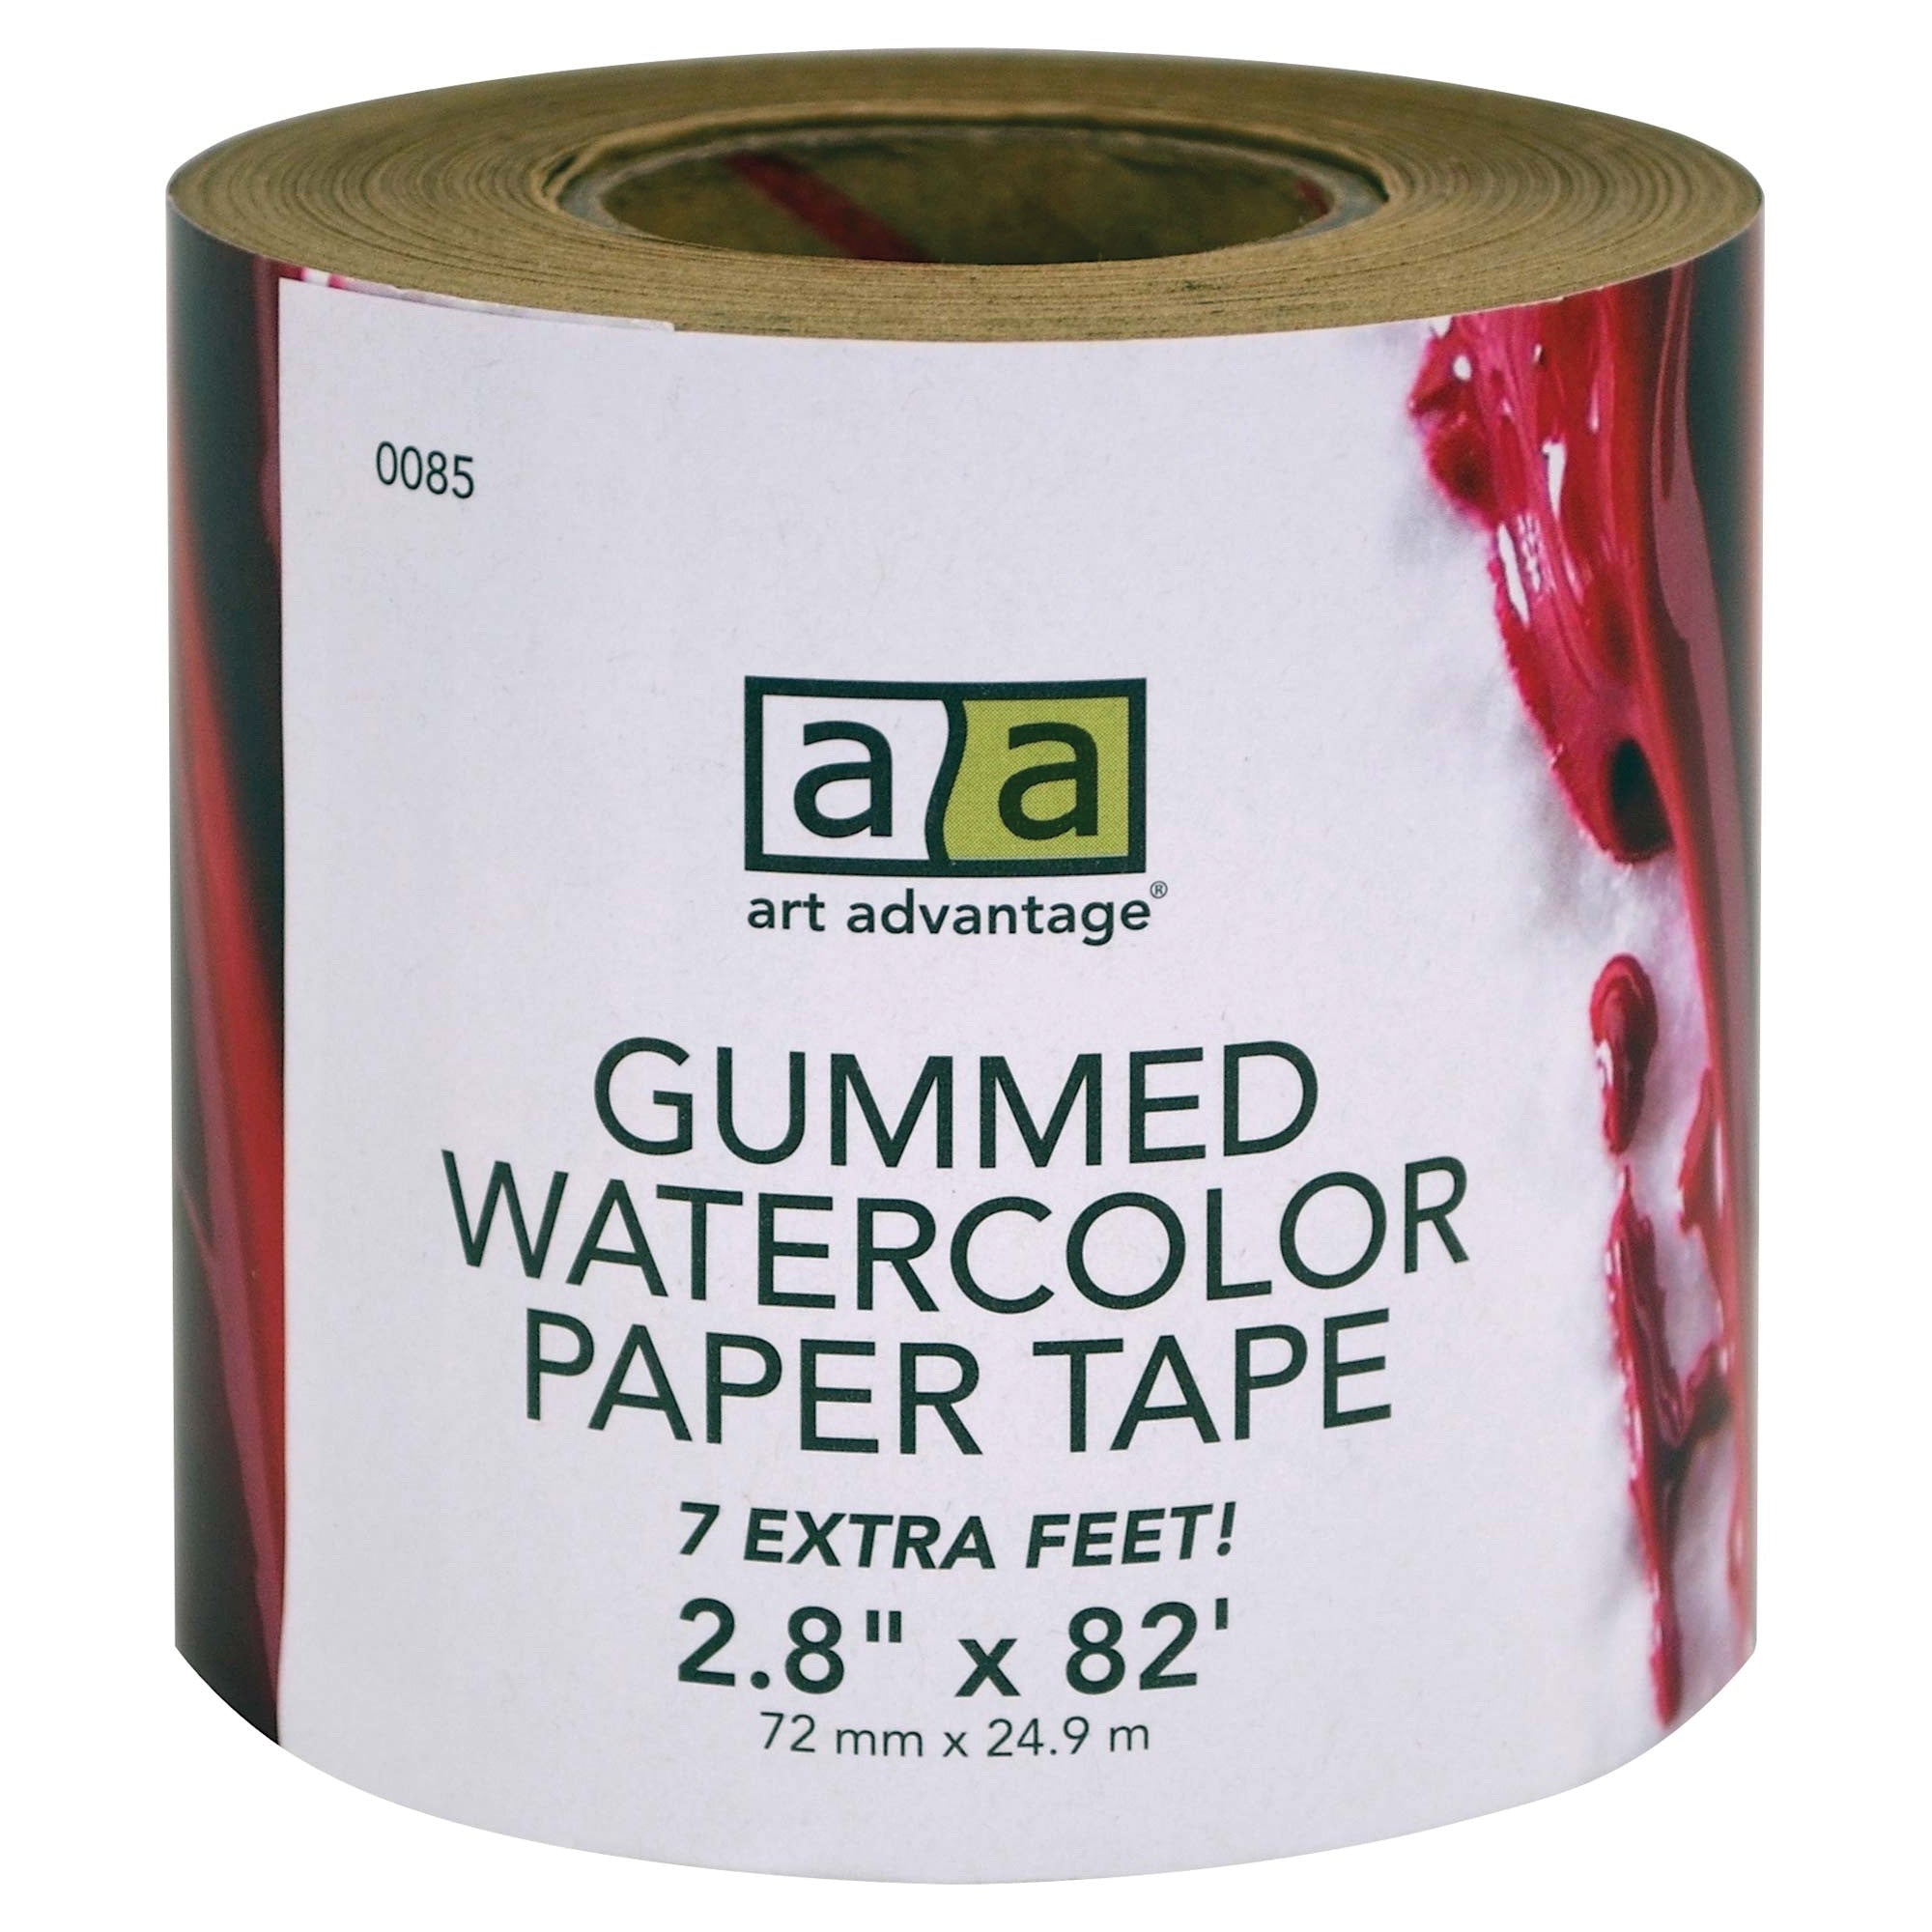 ART AD GUMMED WATERCOLOR PAPER TAPE – Art Plus NH